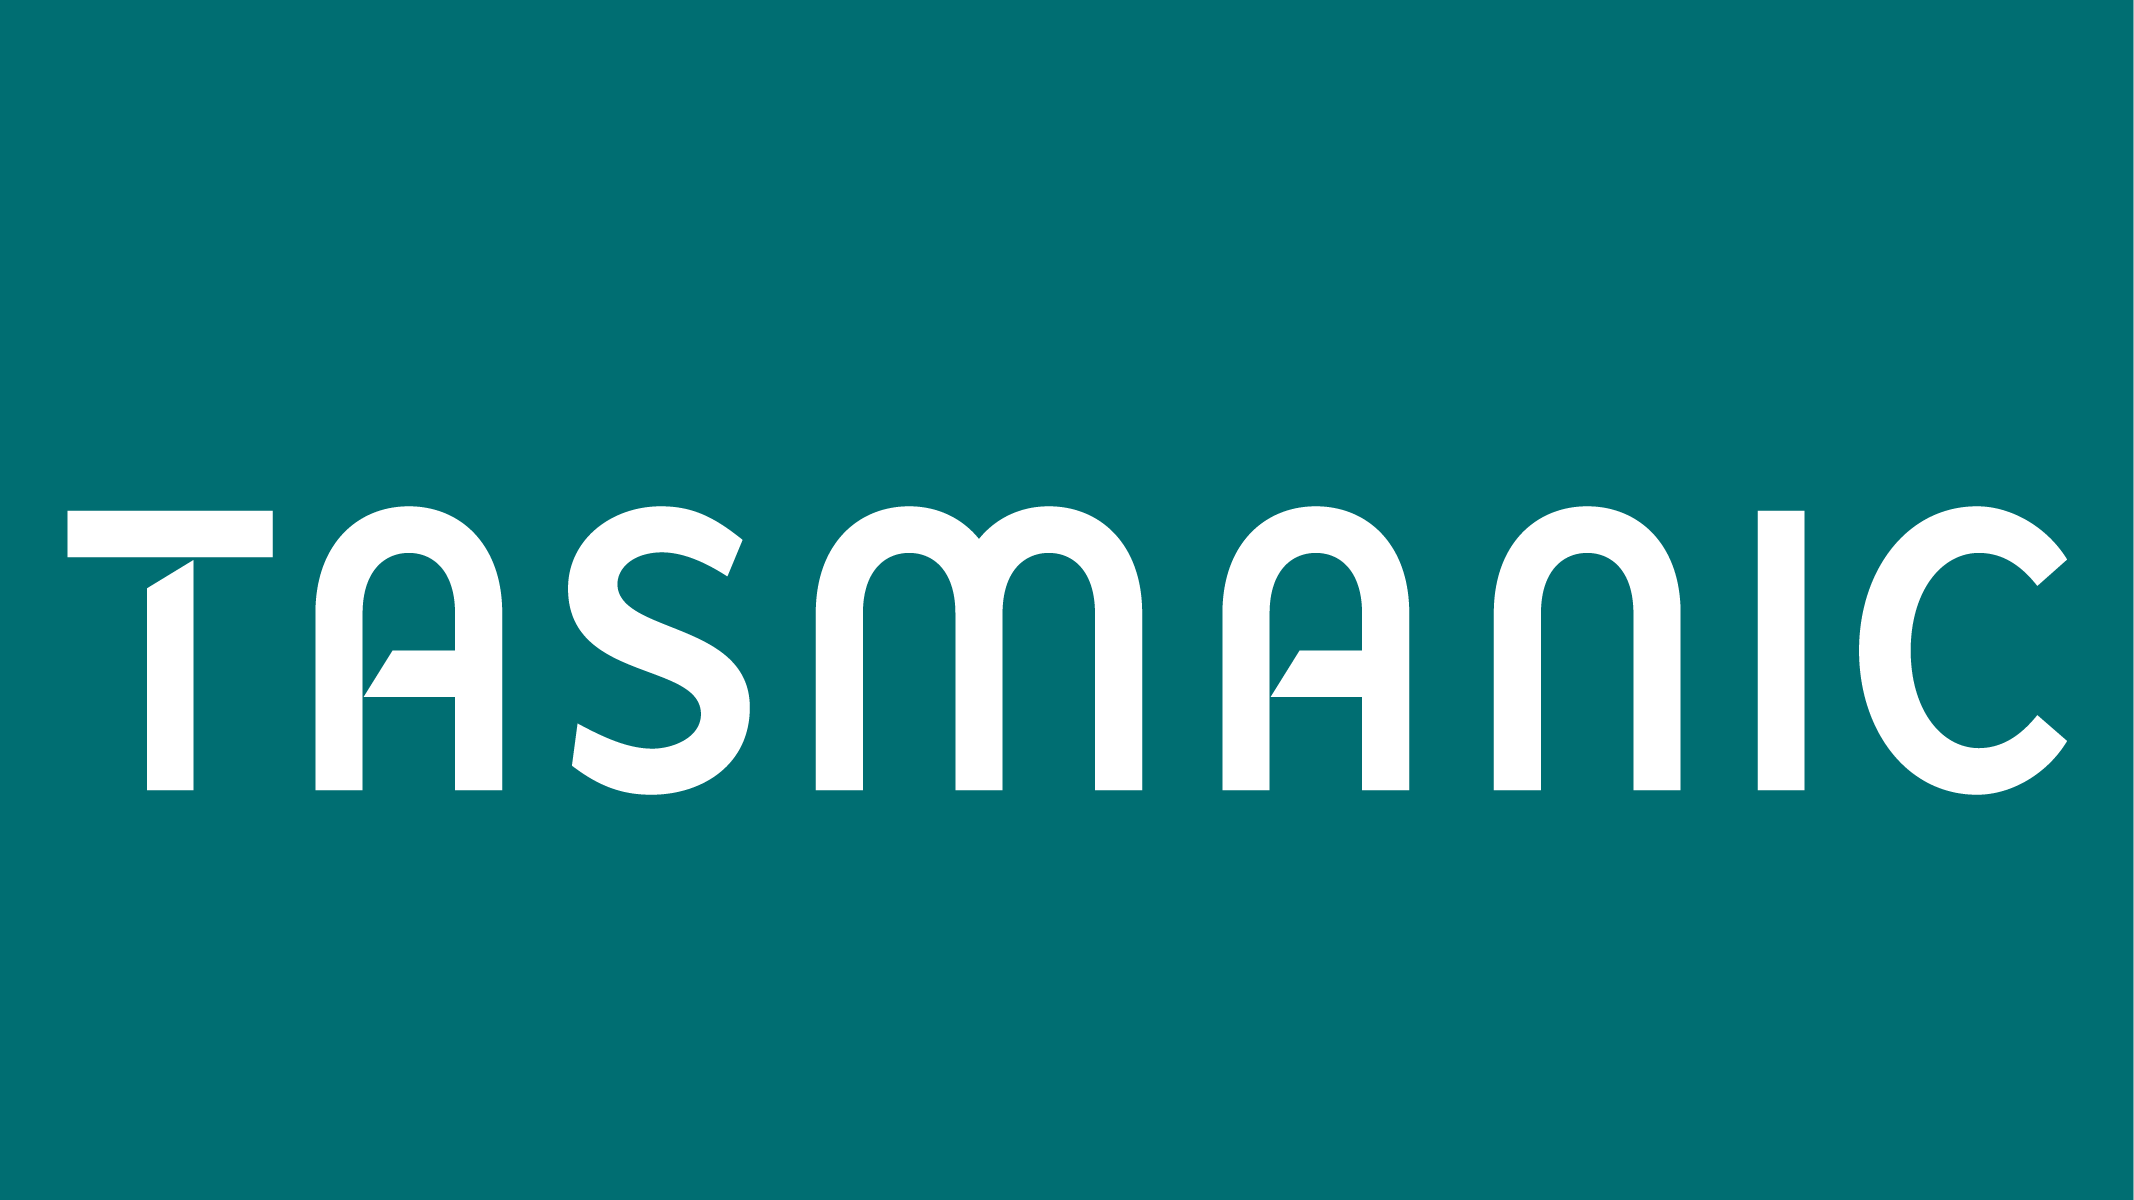 Tasmanisk logo